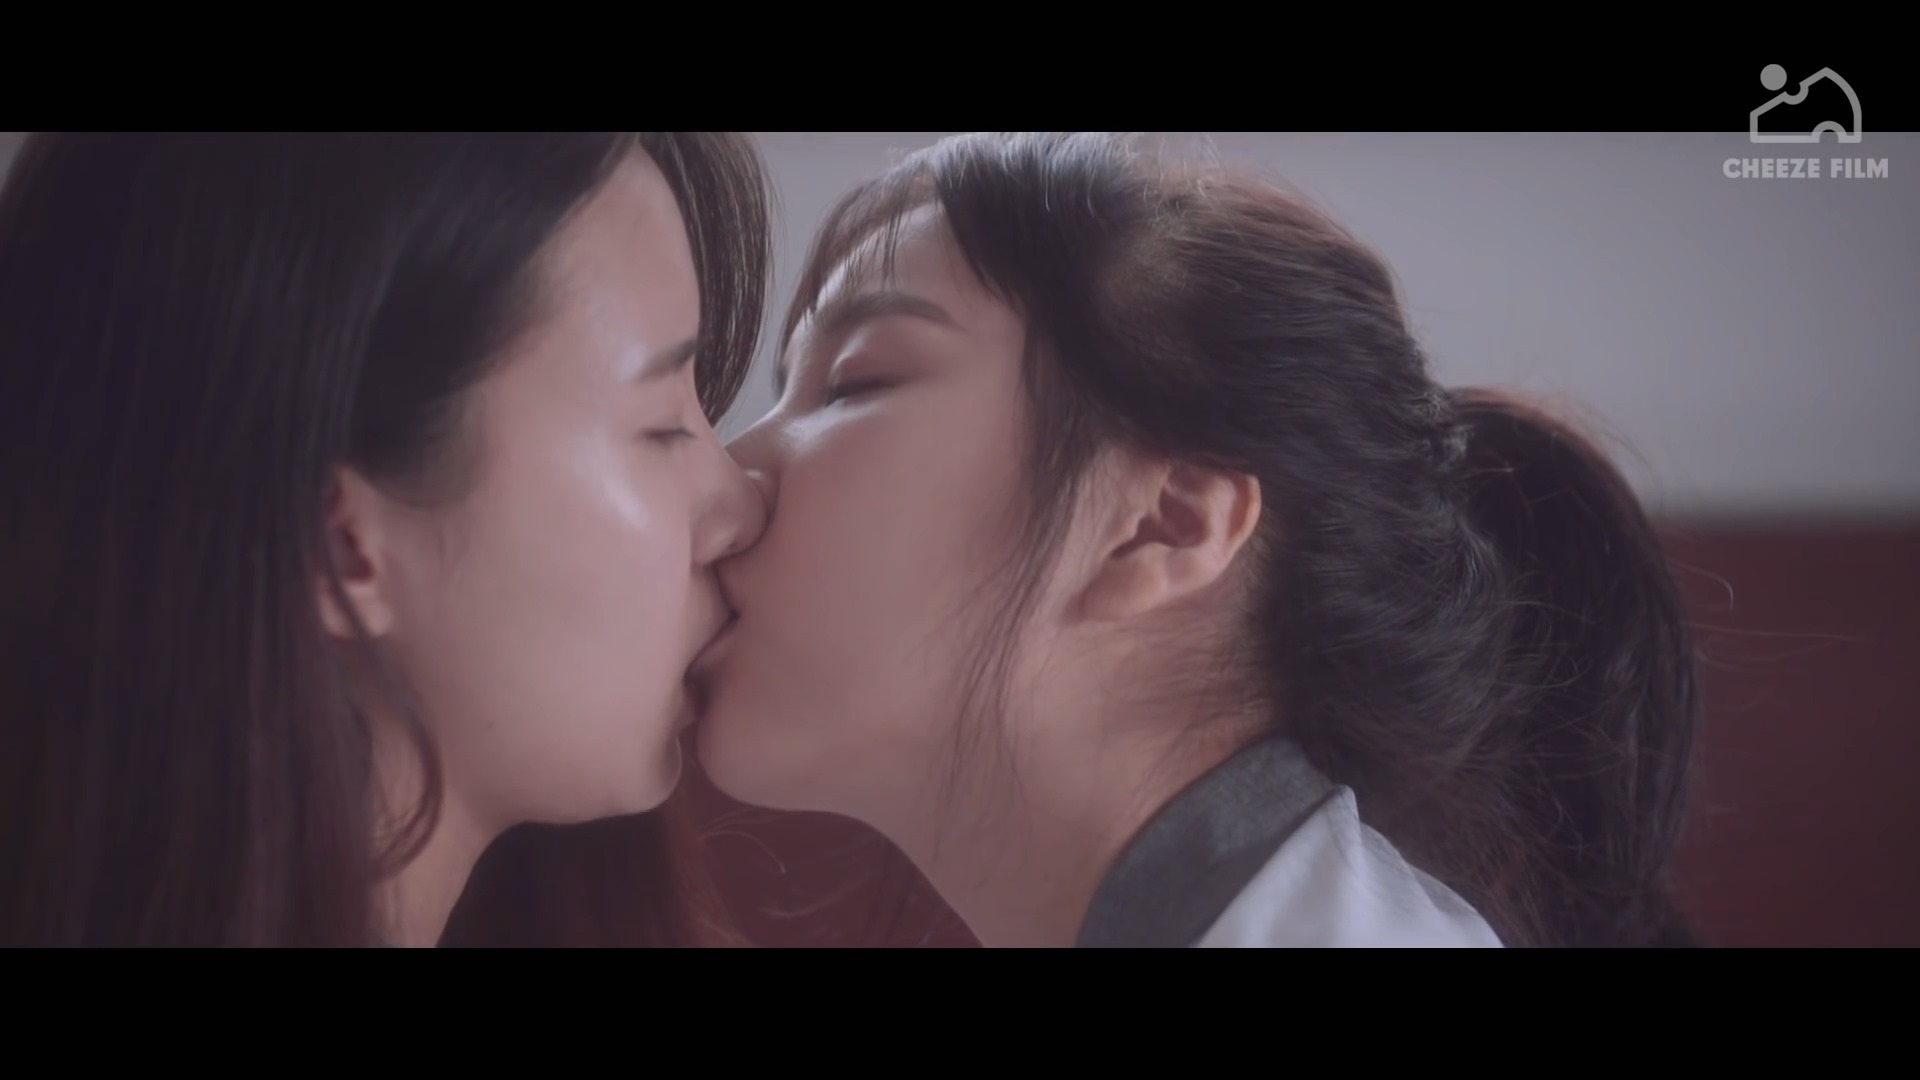 Deep kissing japanese lesbians